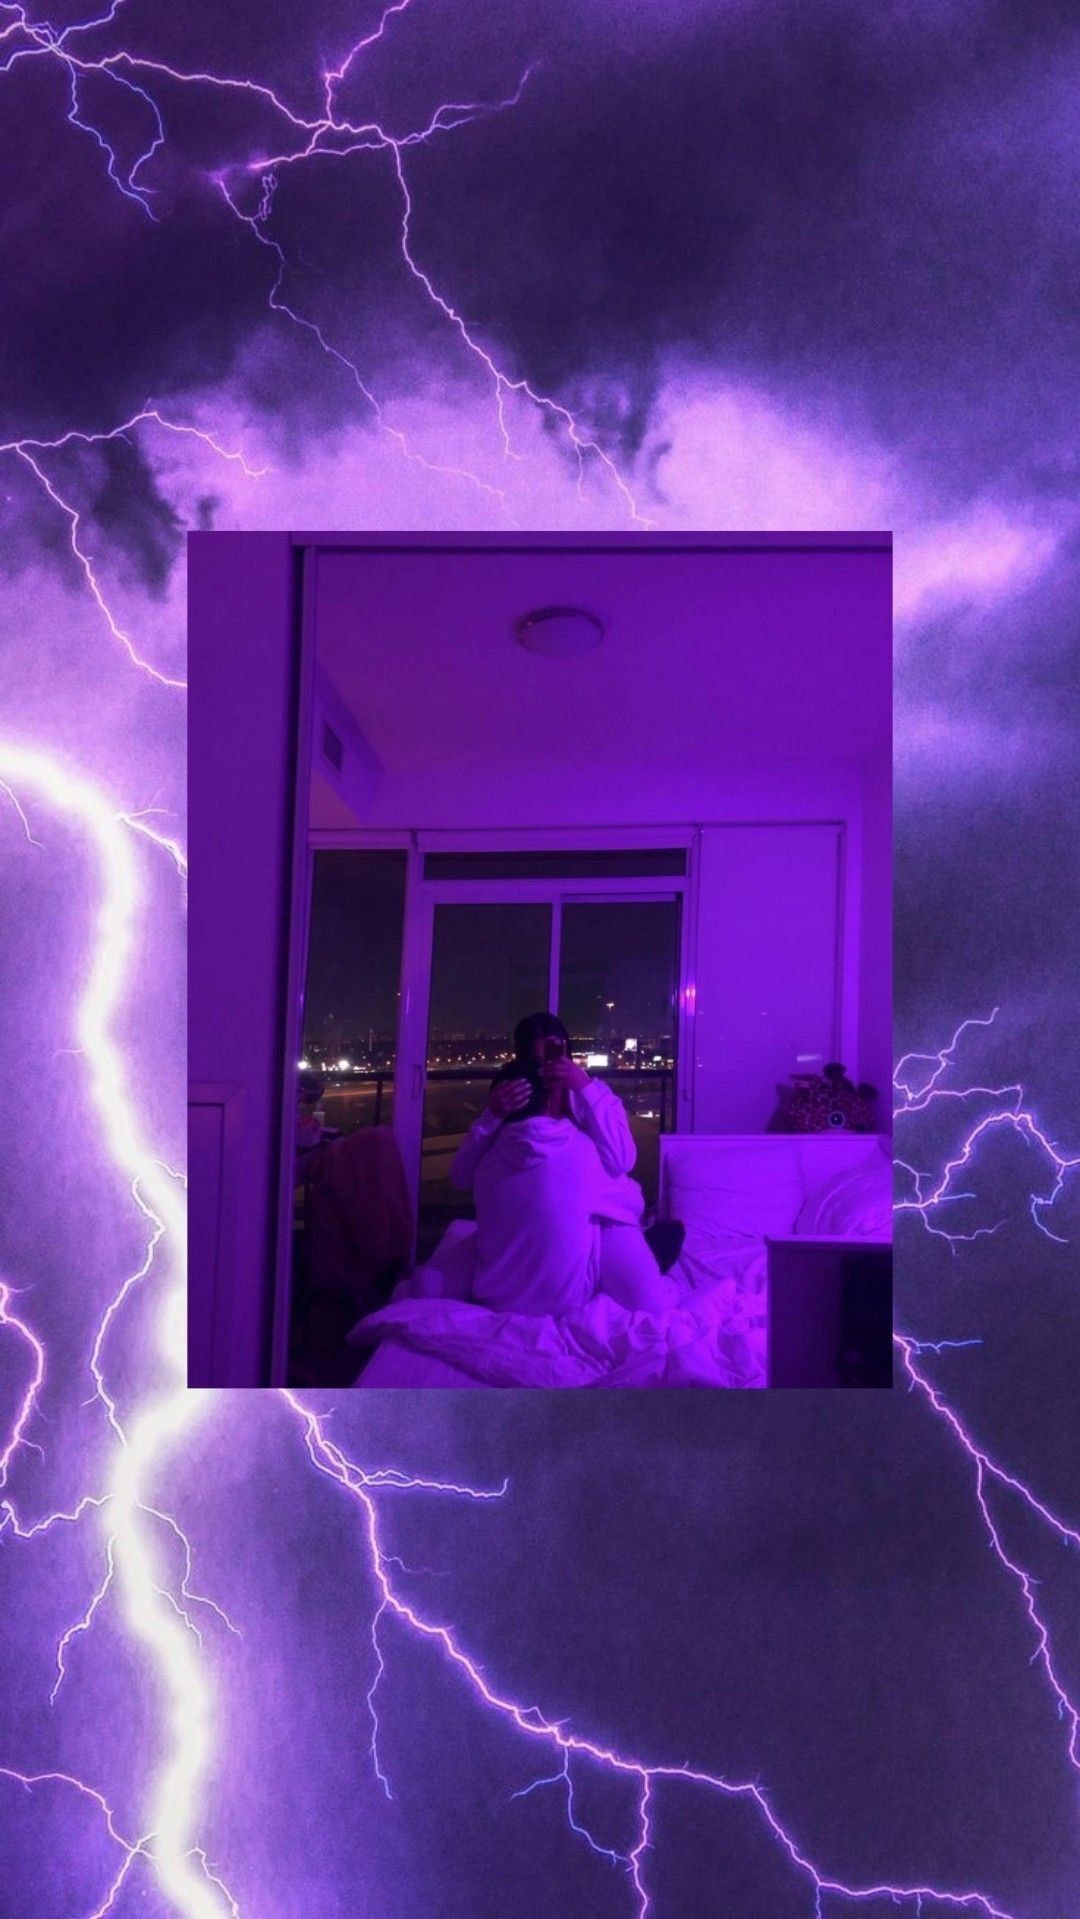 Aesthetic purple lightning storm Wallpaper Download - Lightning, storm